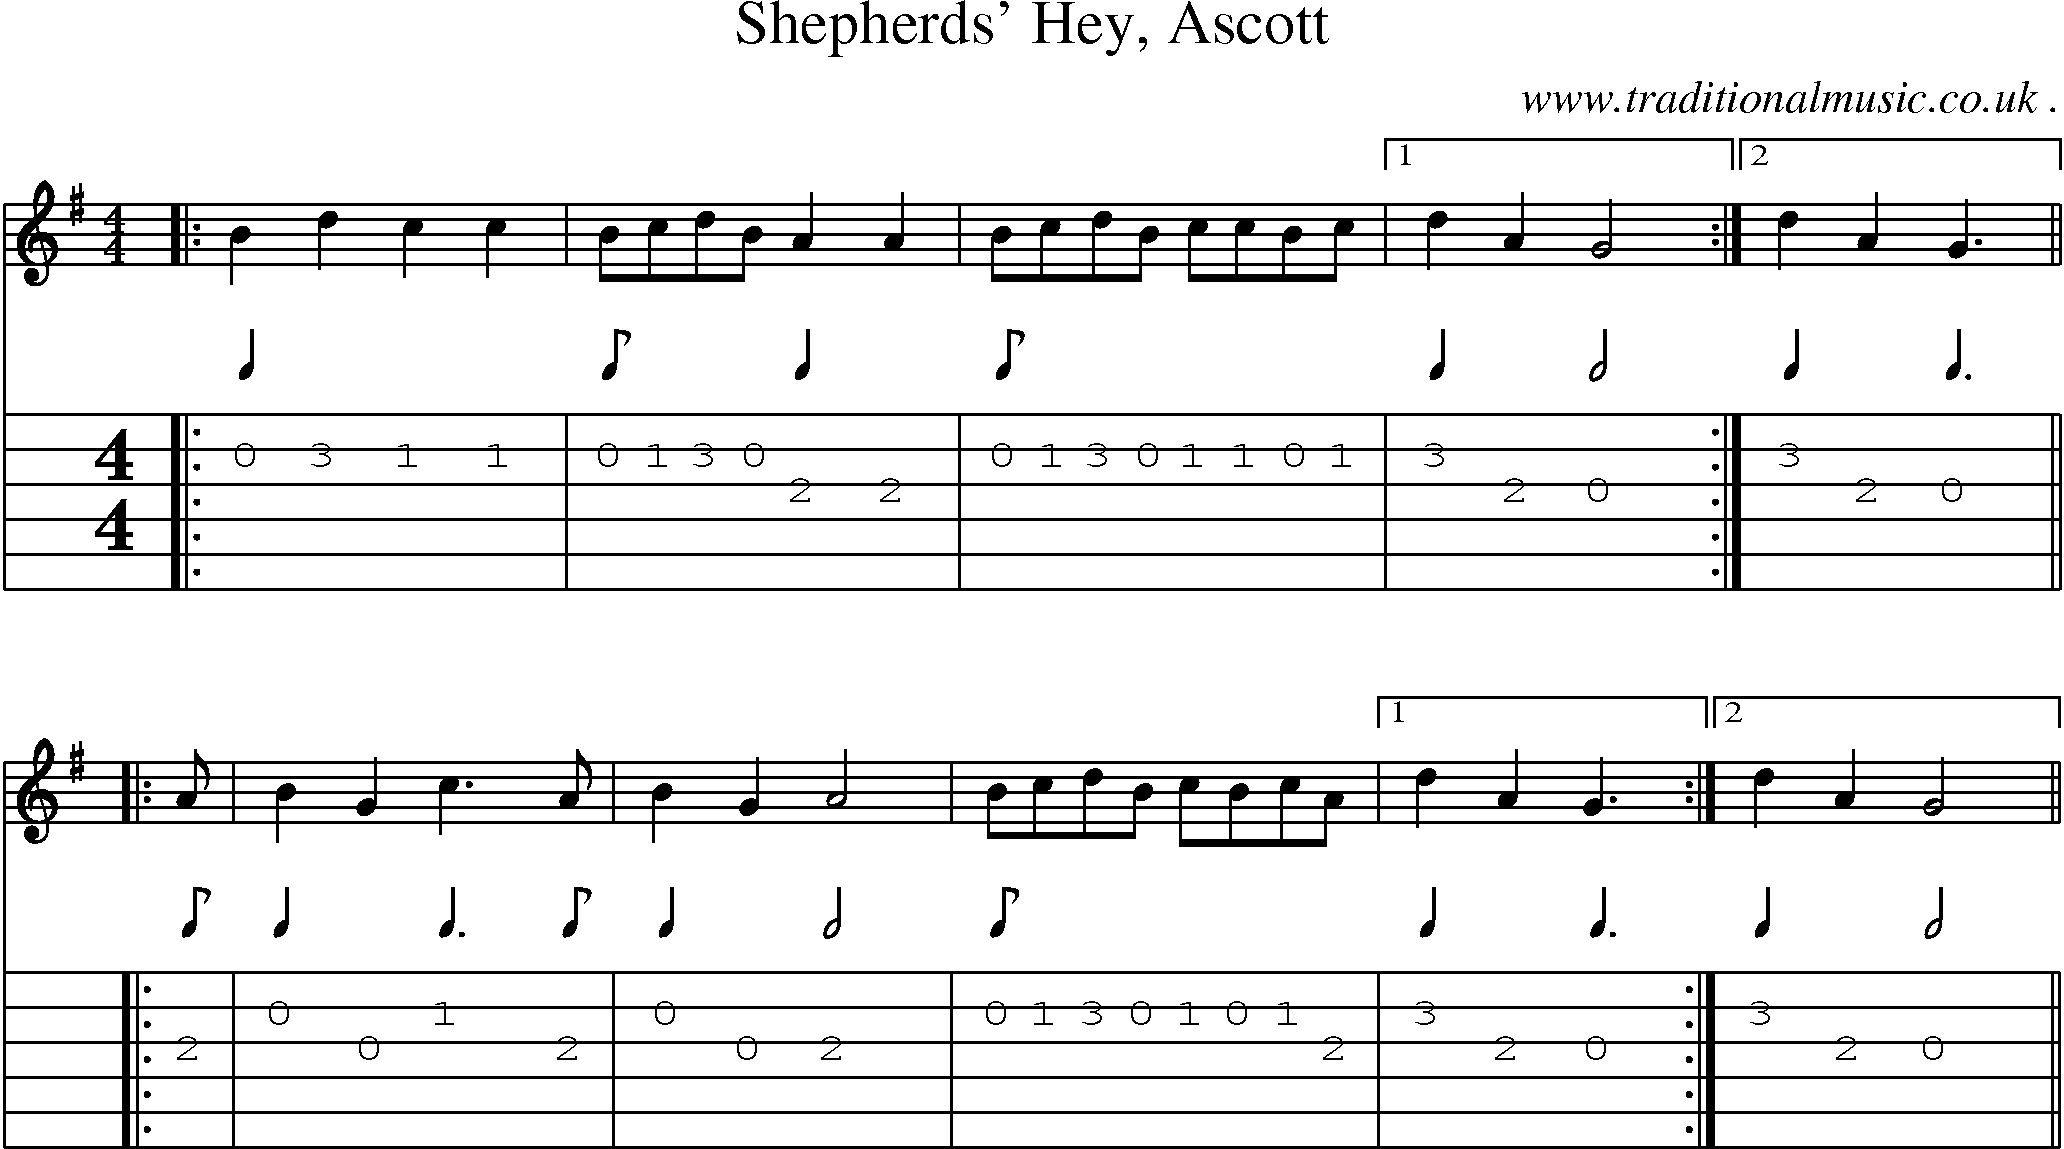 Sheet-Music and Guitar Tabs for Shepherds Hey Ascott